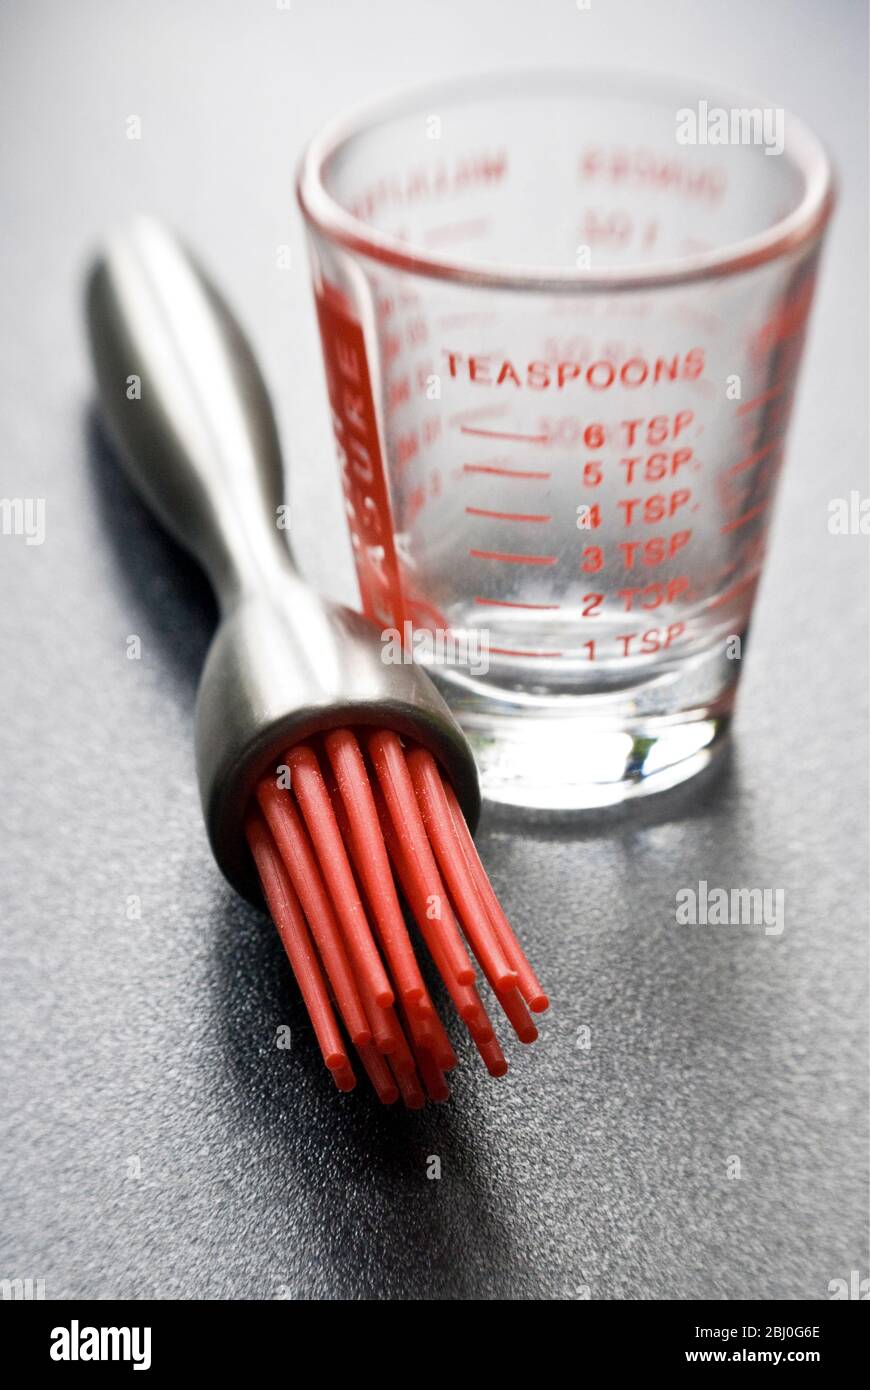 Cepillo de repostería moderno con "cerdas" de silicona roja con un poco de cristal de medición sobre una superficie texturizada oscura - Foto de stock